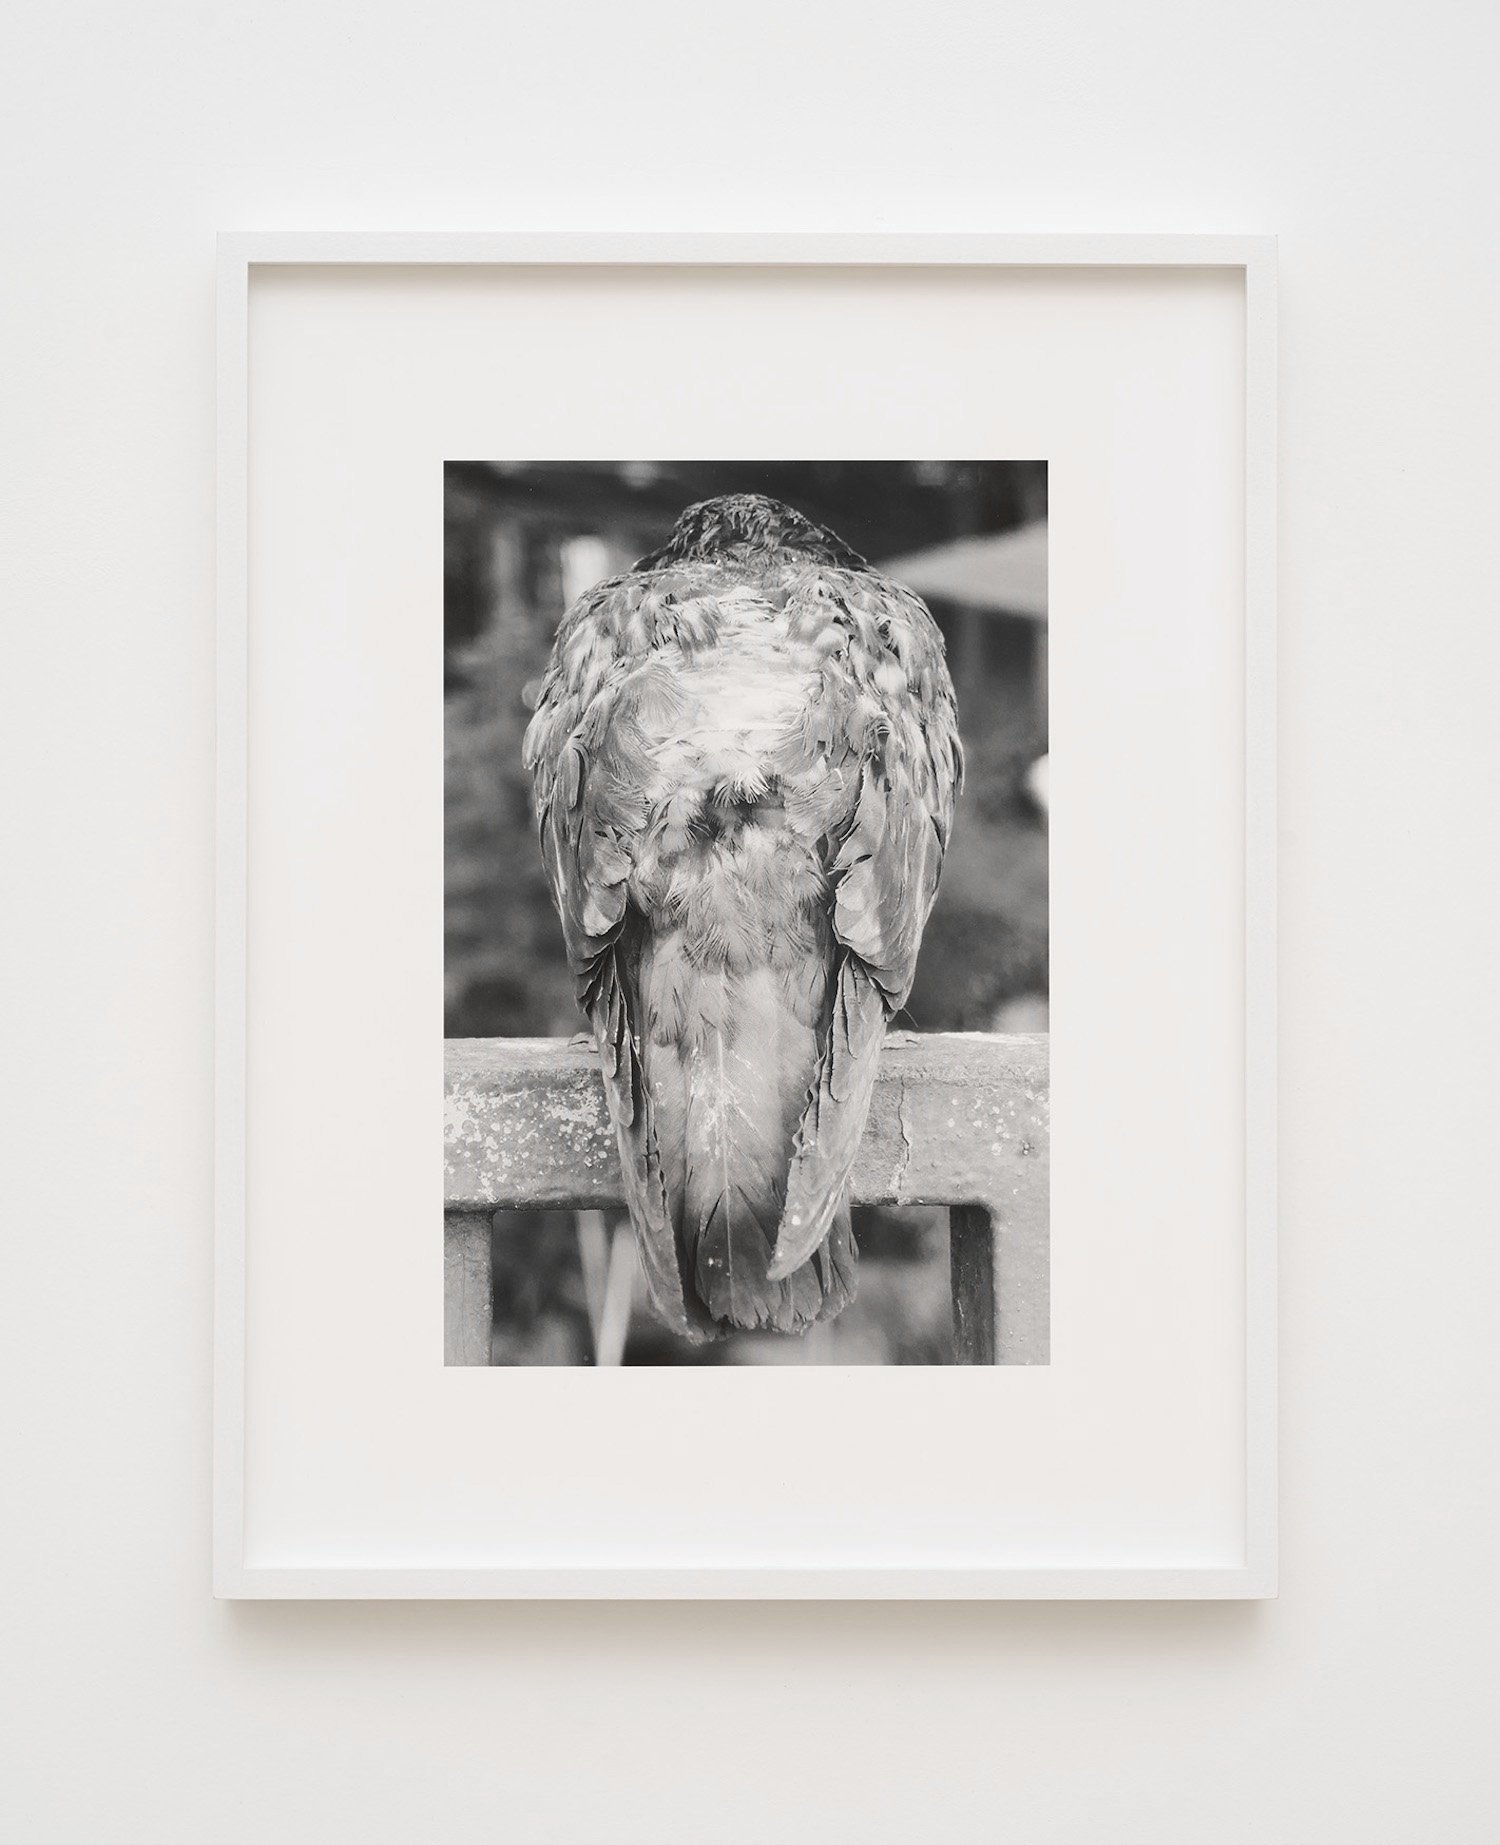  pigeon 2022  24 x 16 cm, archival pigment print on cotton rag (ed. of 3 + 1 ap) 